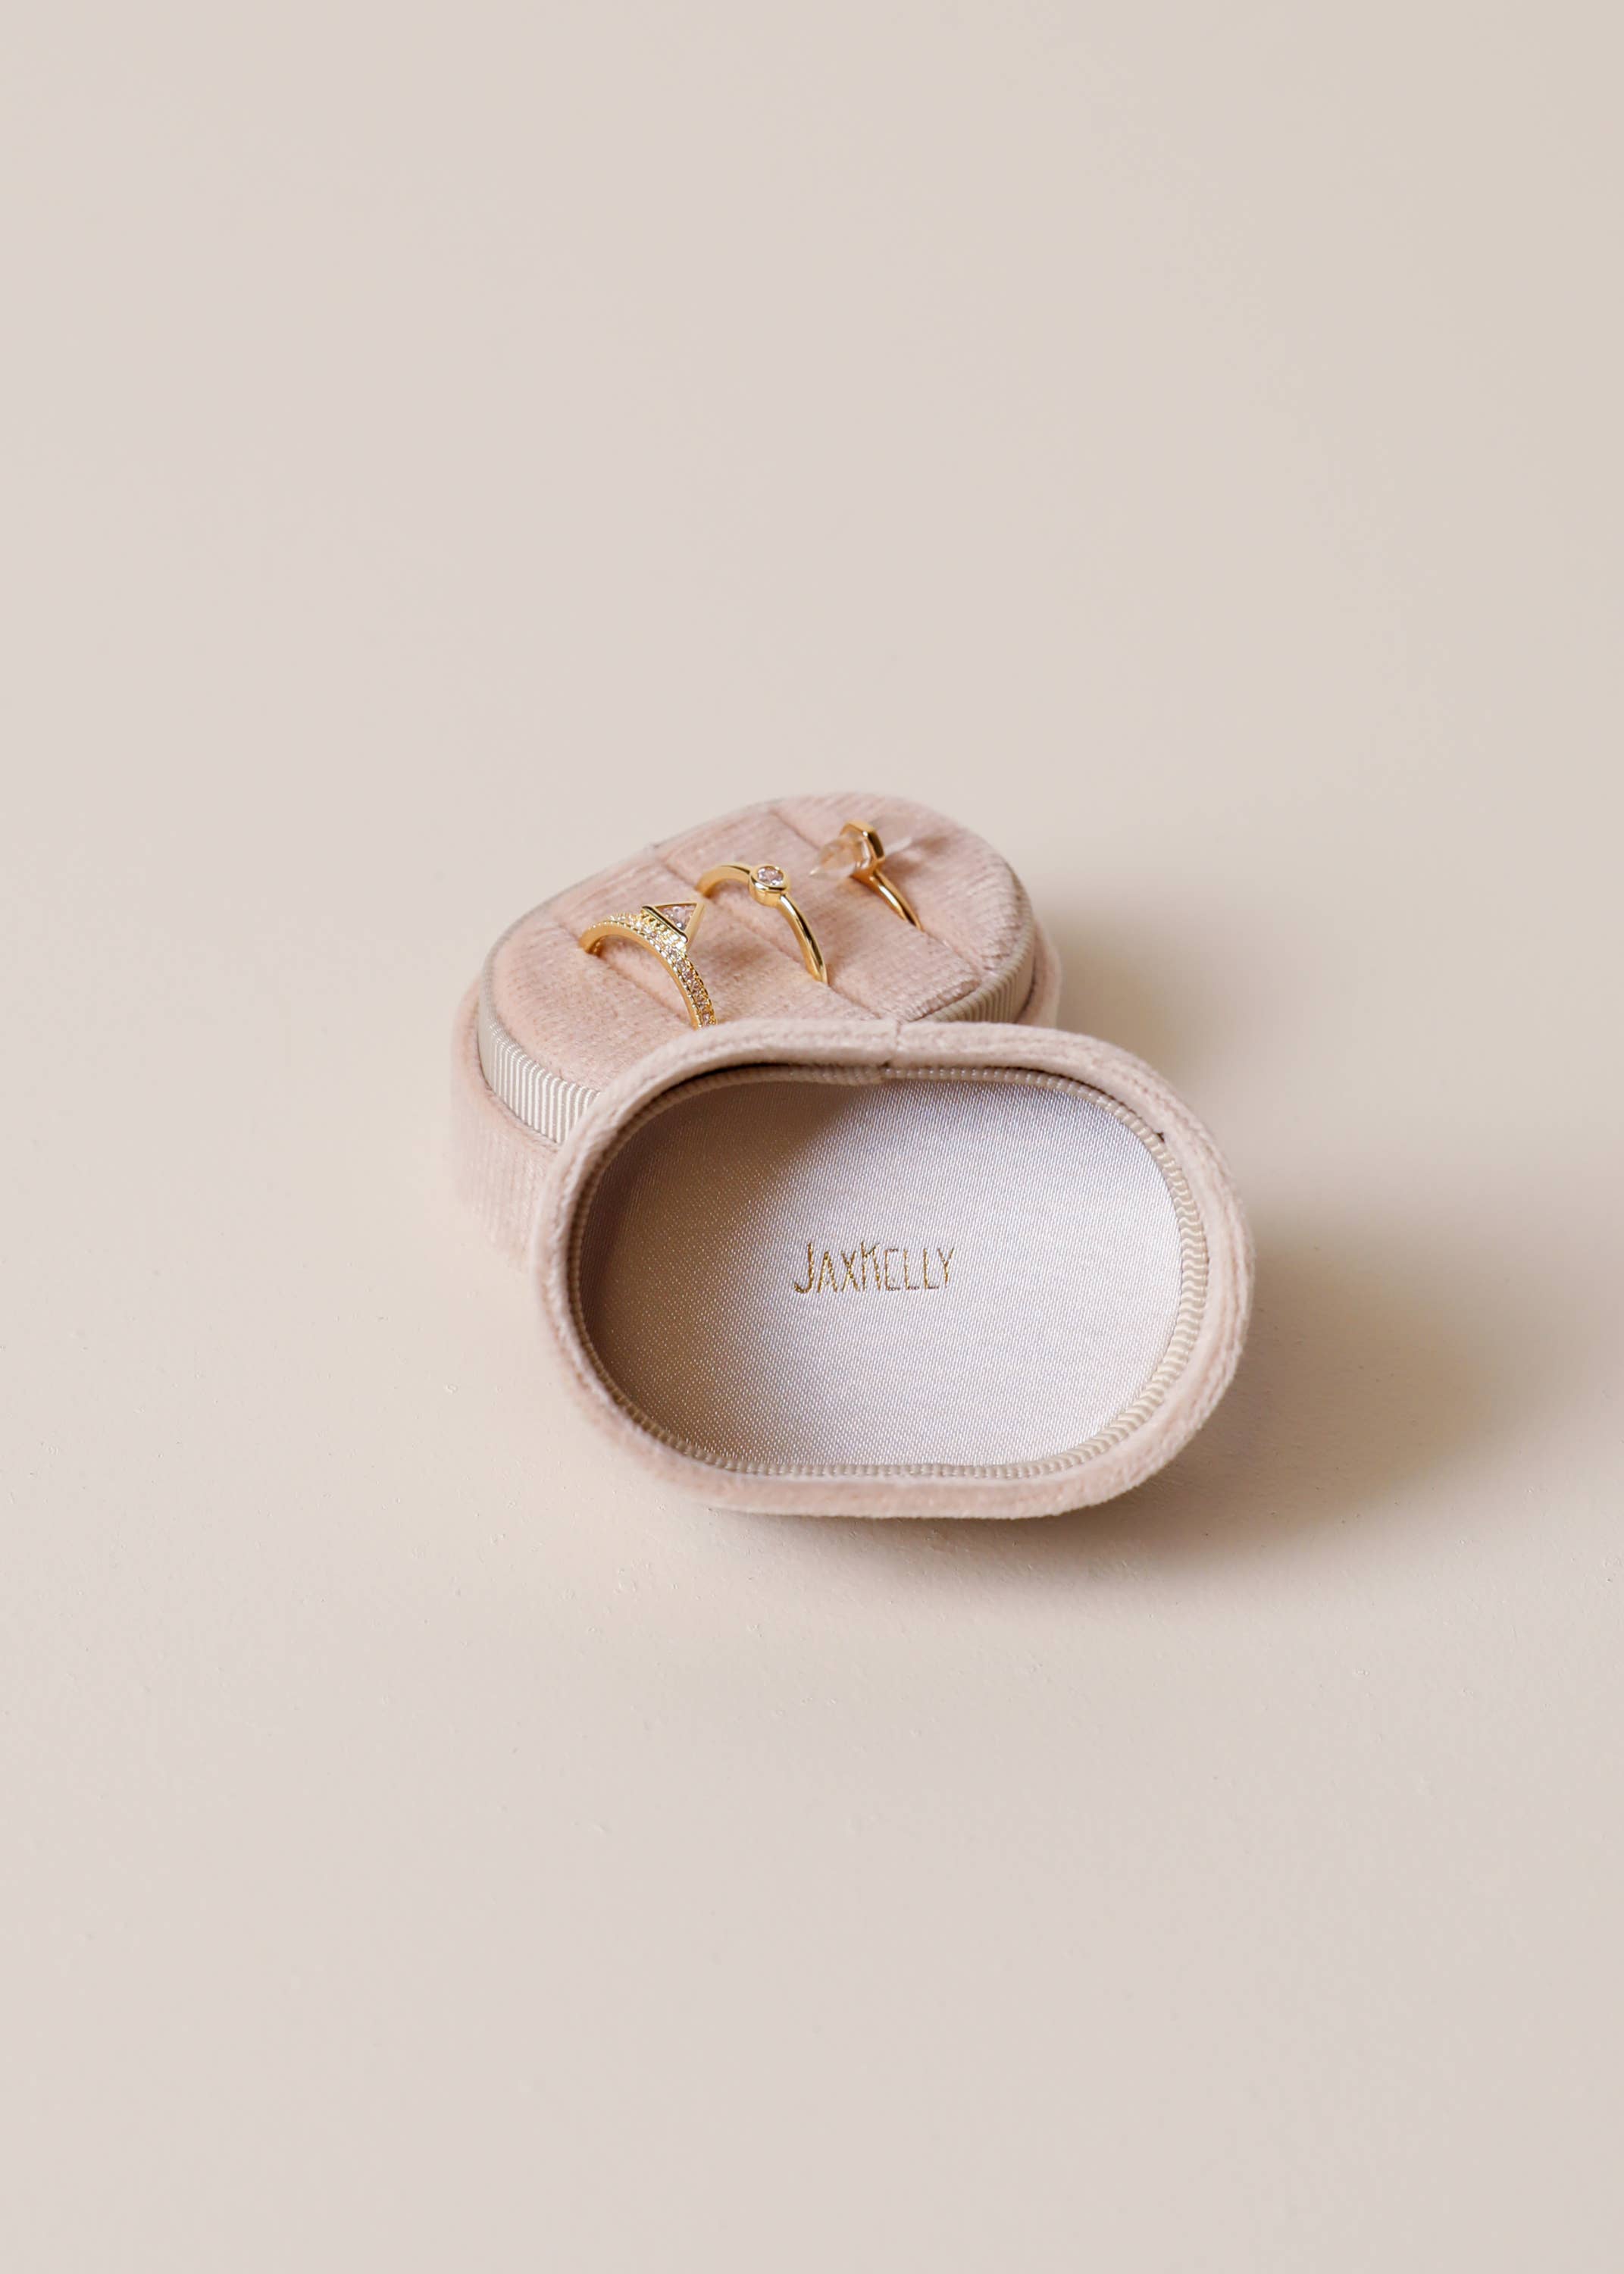 JaxKelly - Velvet Jewelry Box - Small Oval - Cream